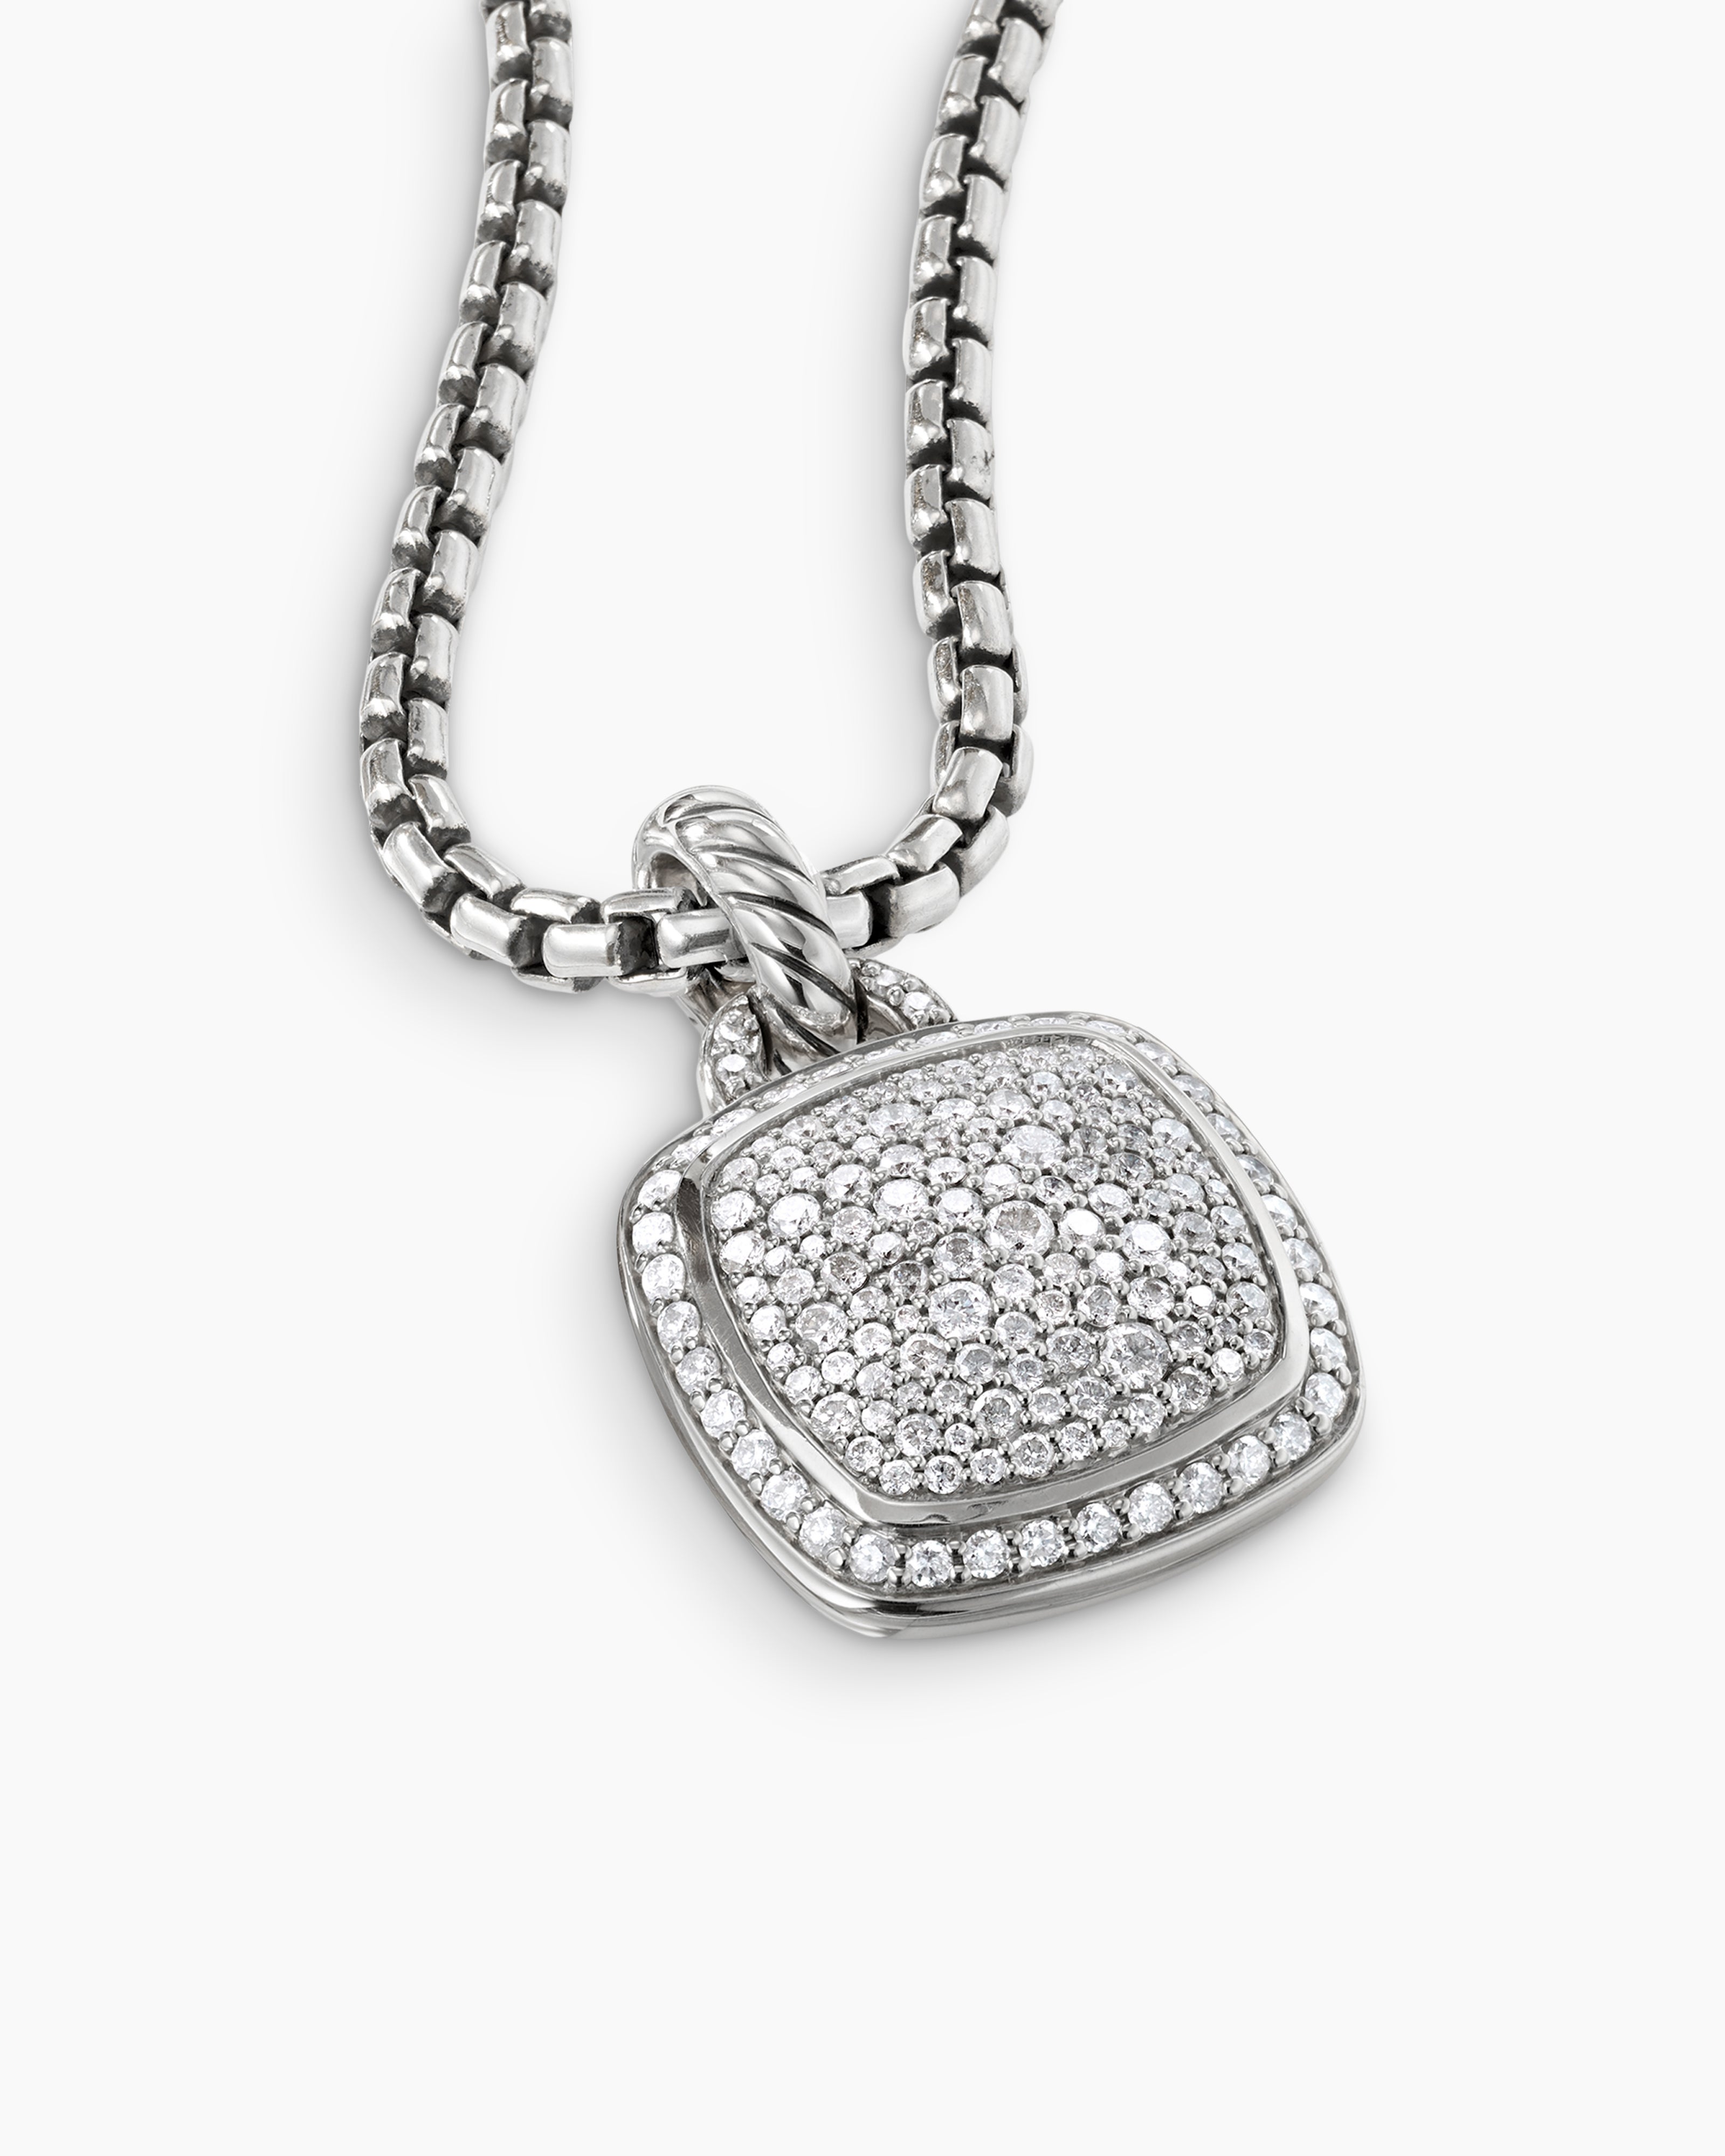 Albion® Pendant in Sterling Silver with Pavé Diamonds, 14mm | David Yurman